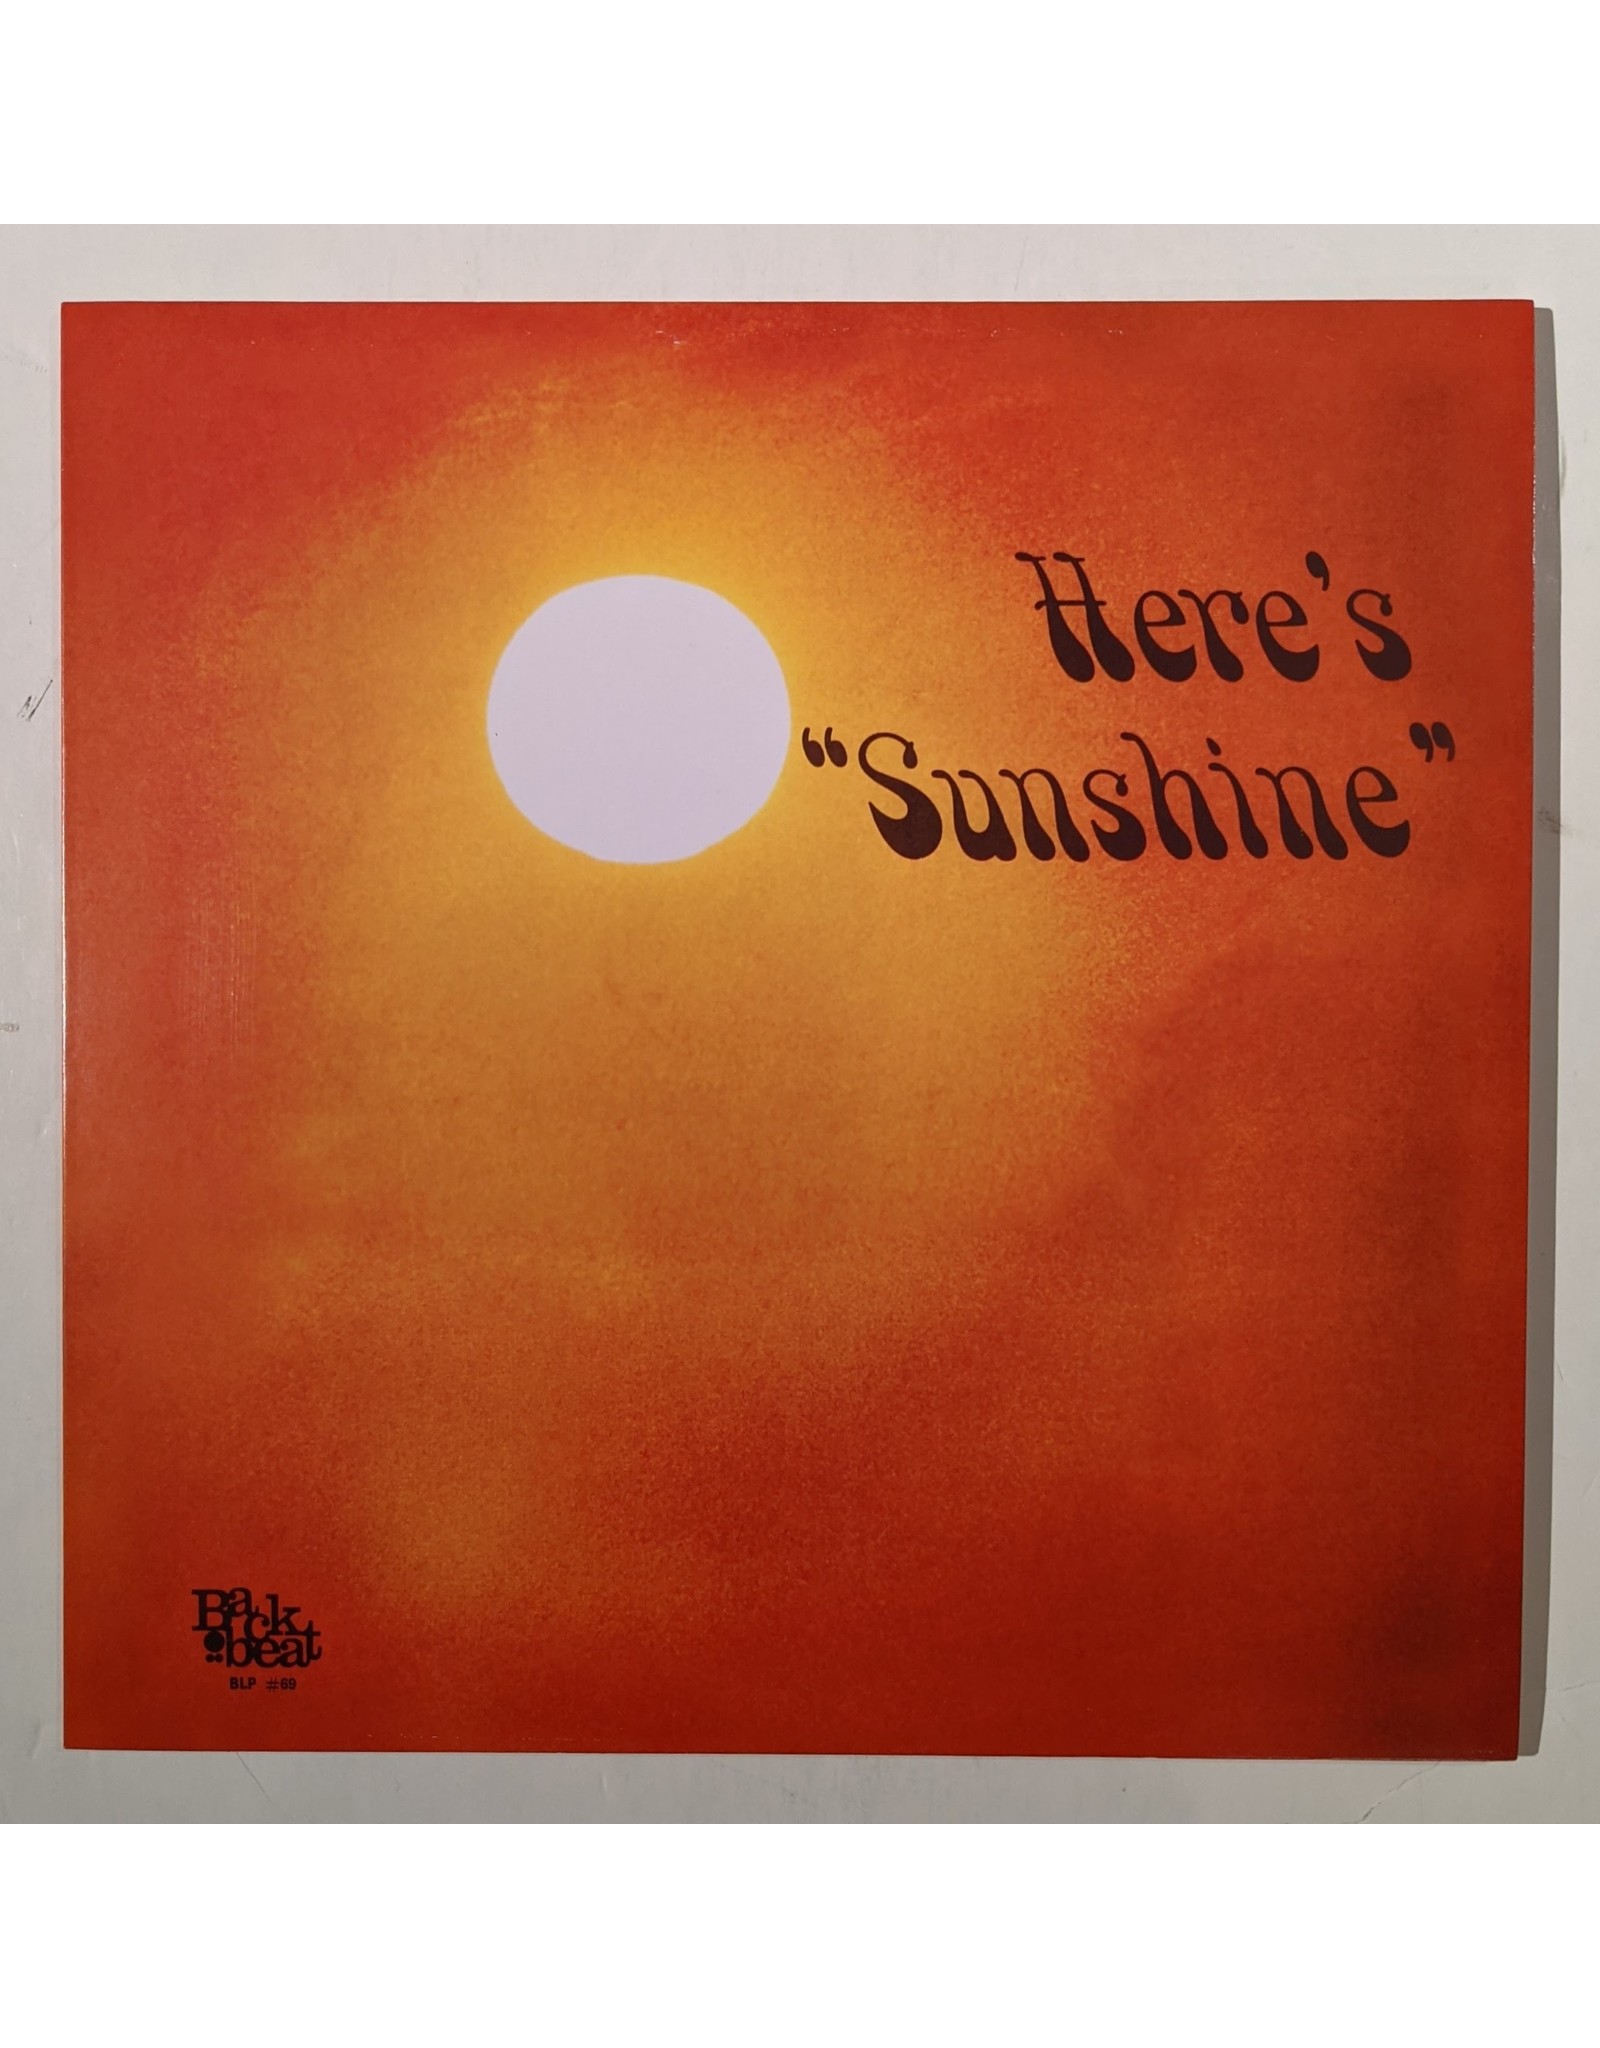 USED: Larry 'Sunshine' Rice: Here's Sunshine LP